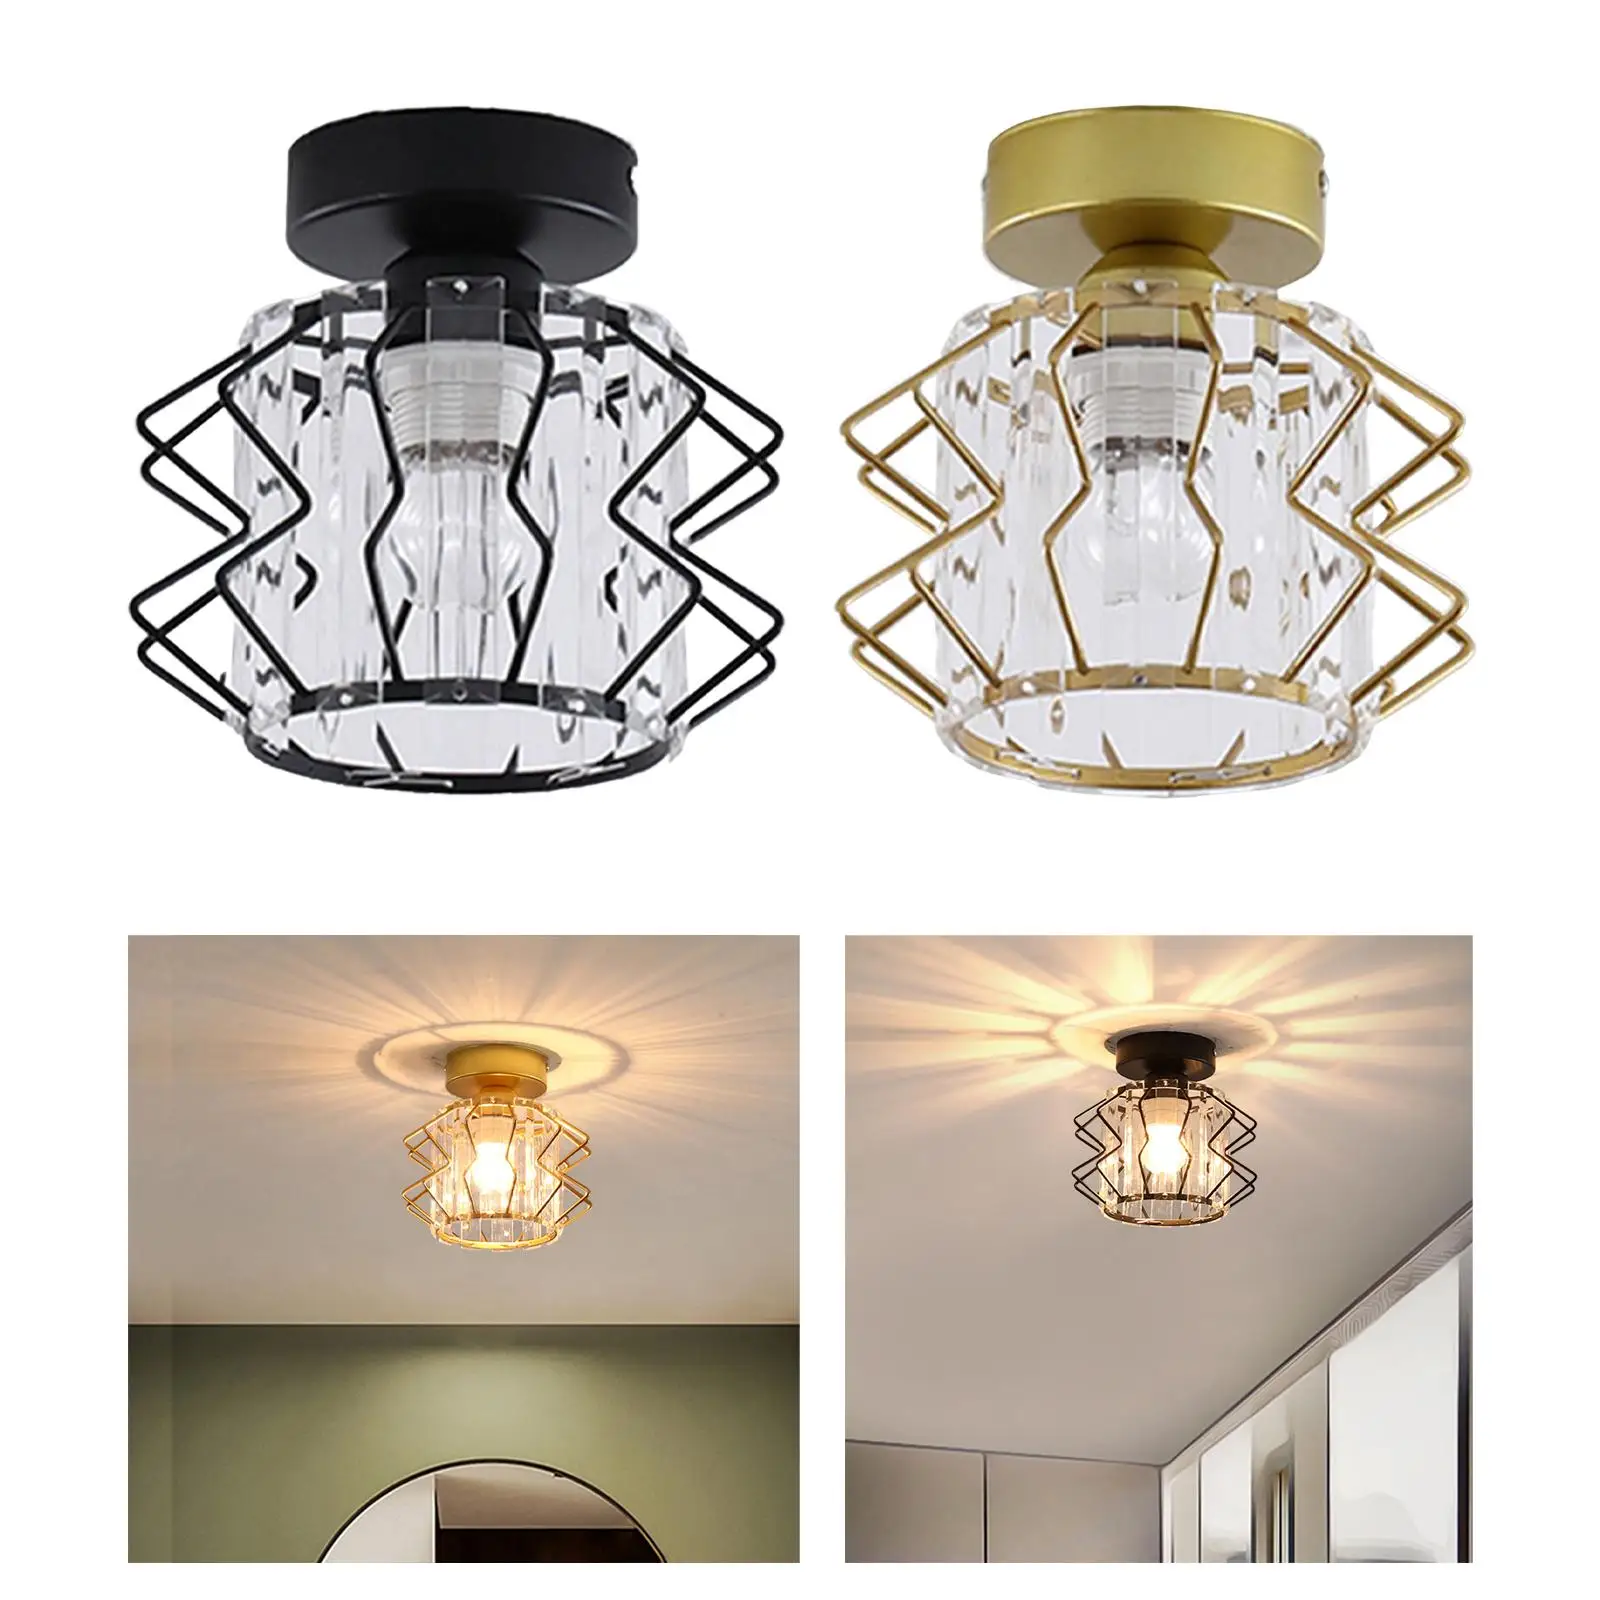 Antique LED Ceiling Light E27 Lamp Flush Mount for Stairway Bedroom Kitchen Dining Room